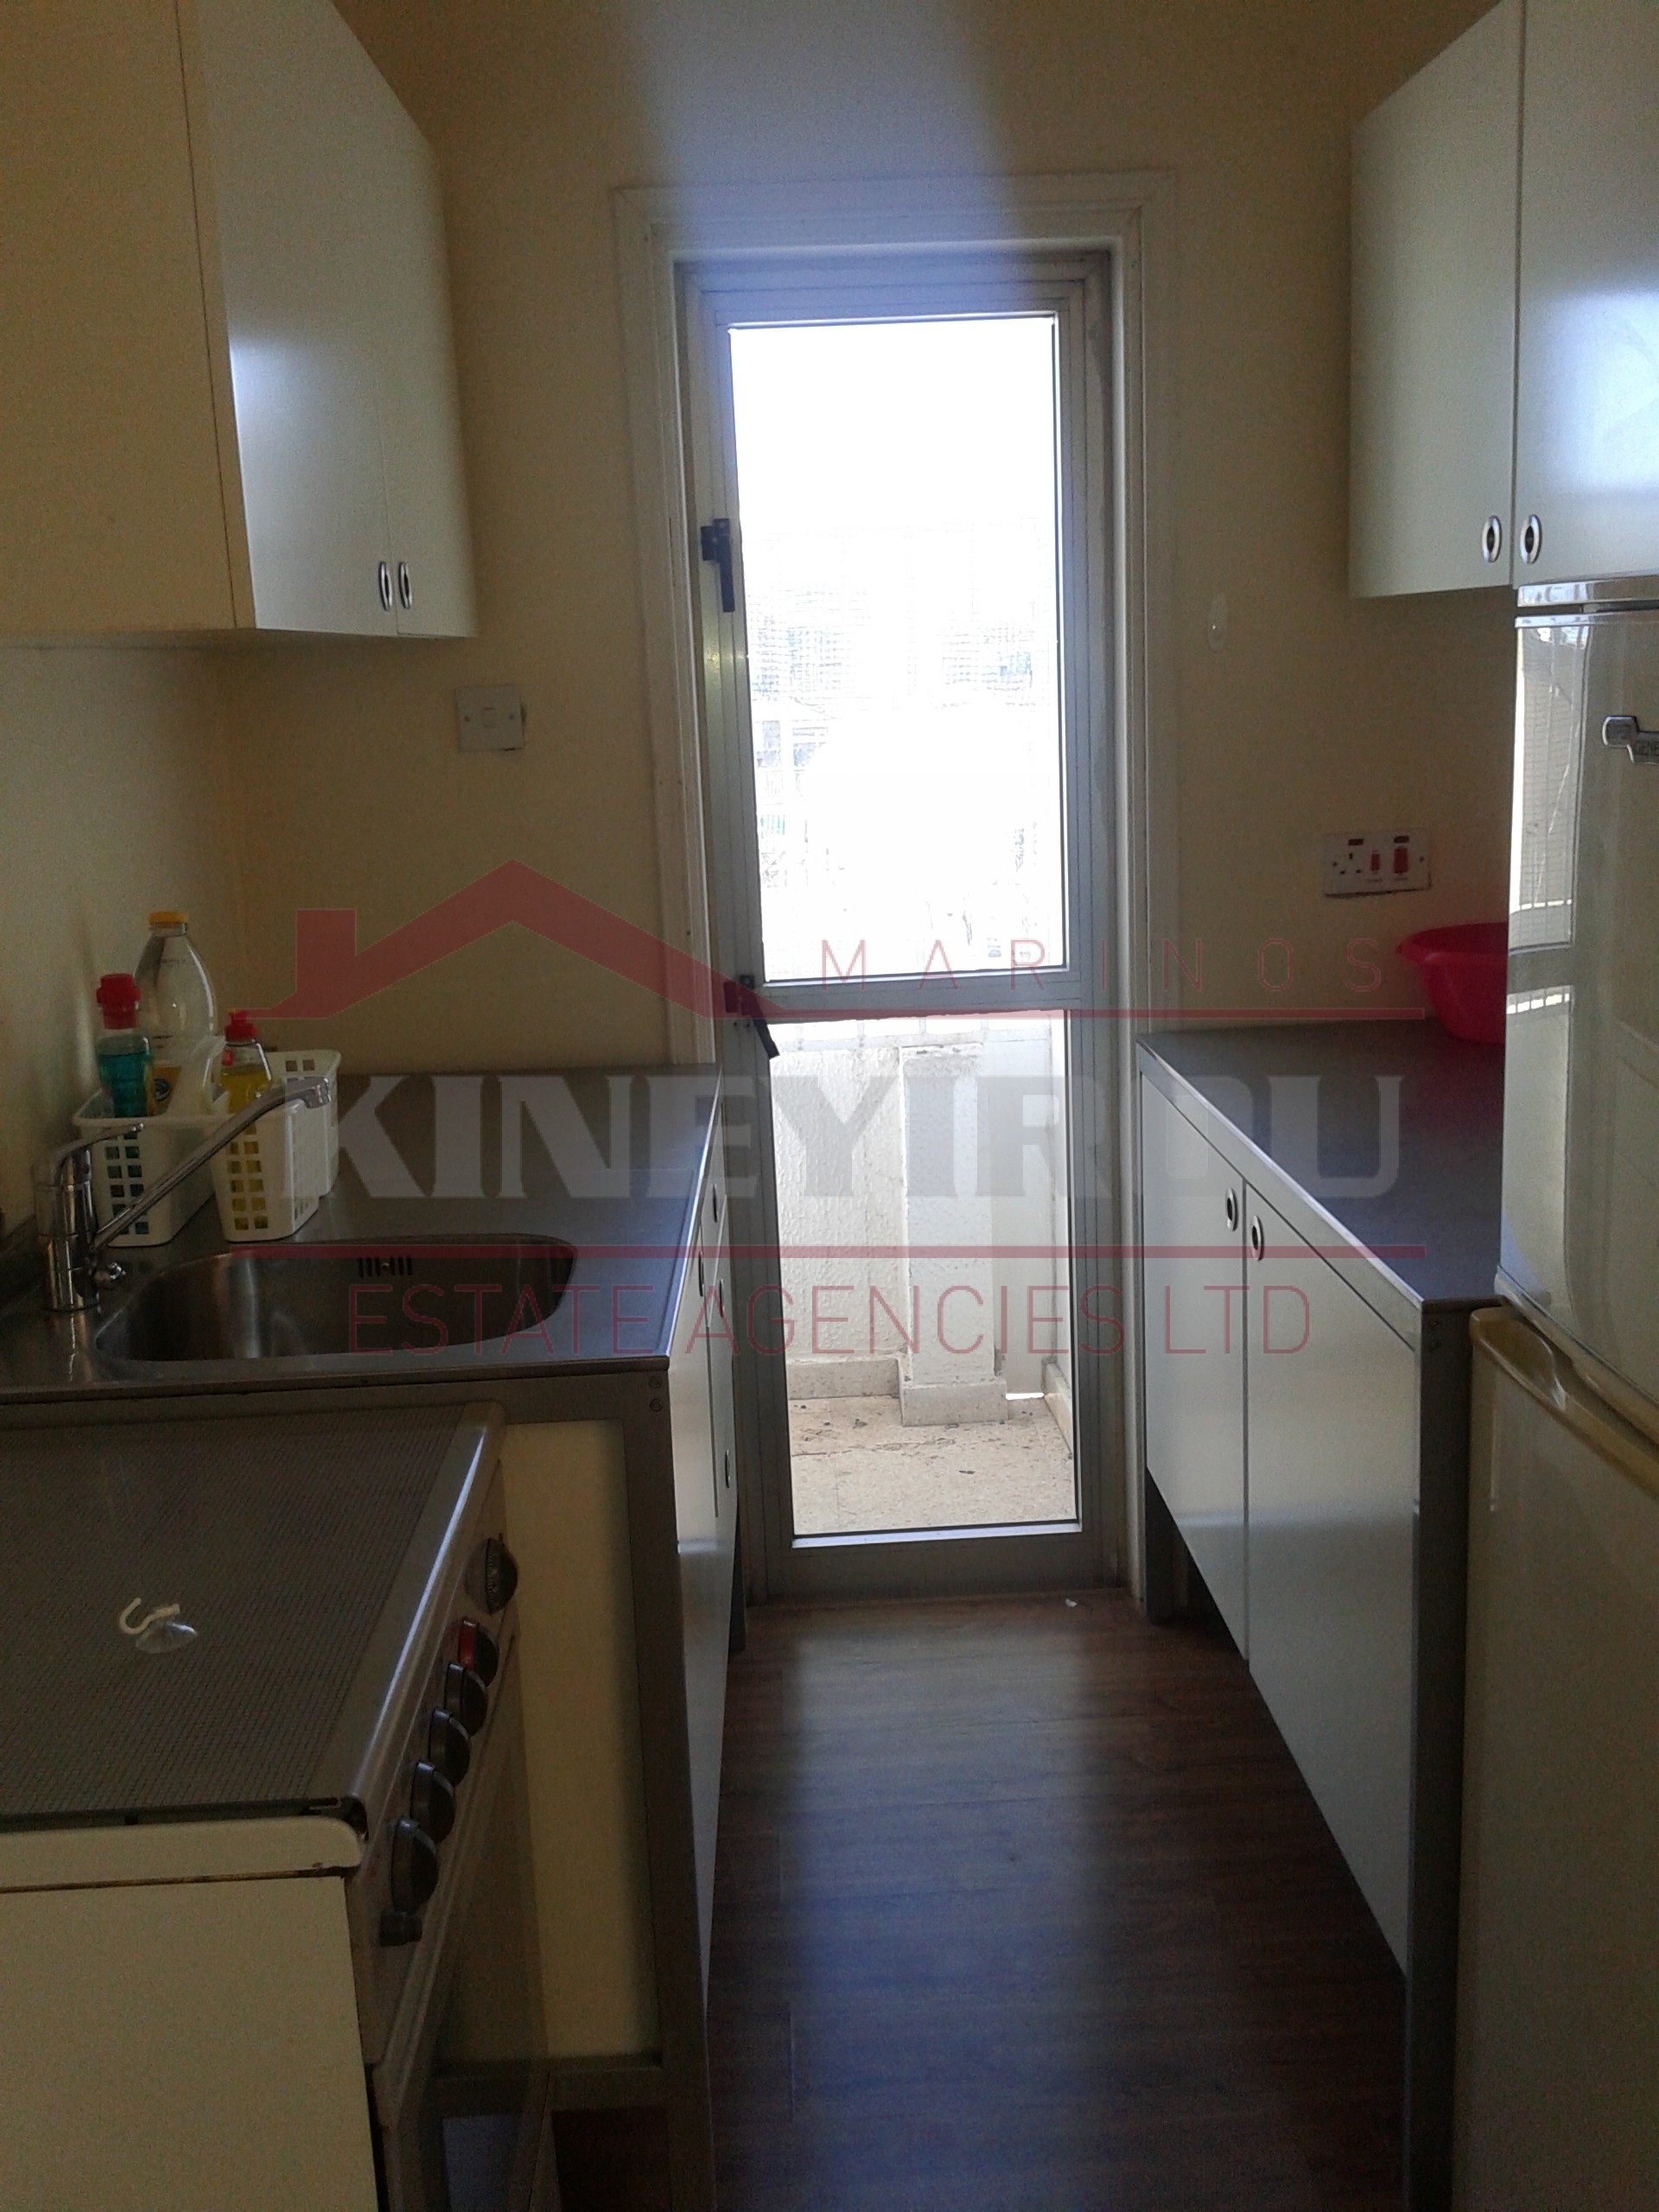 Property for sale in Cyprus,Apartment in Faneromeni, Larnaca